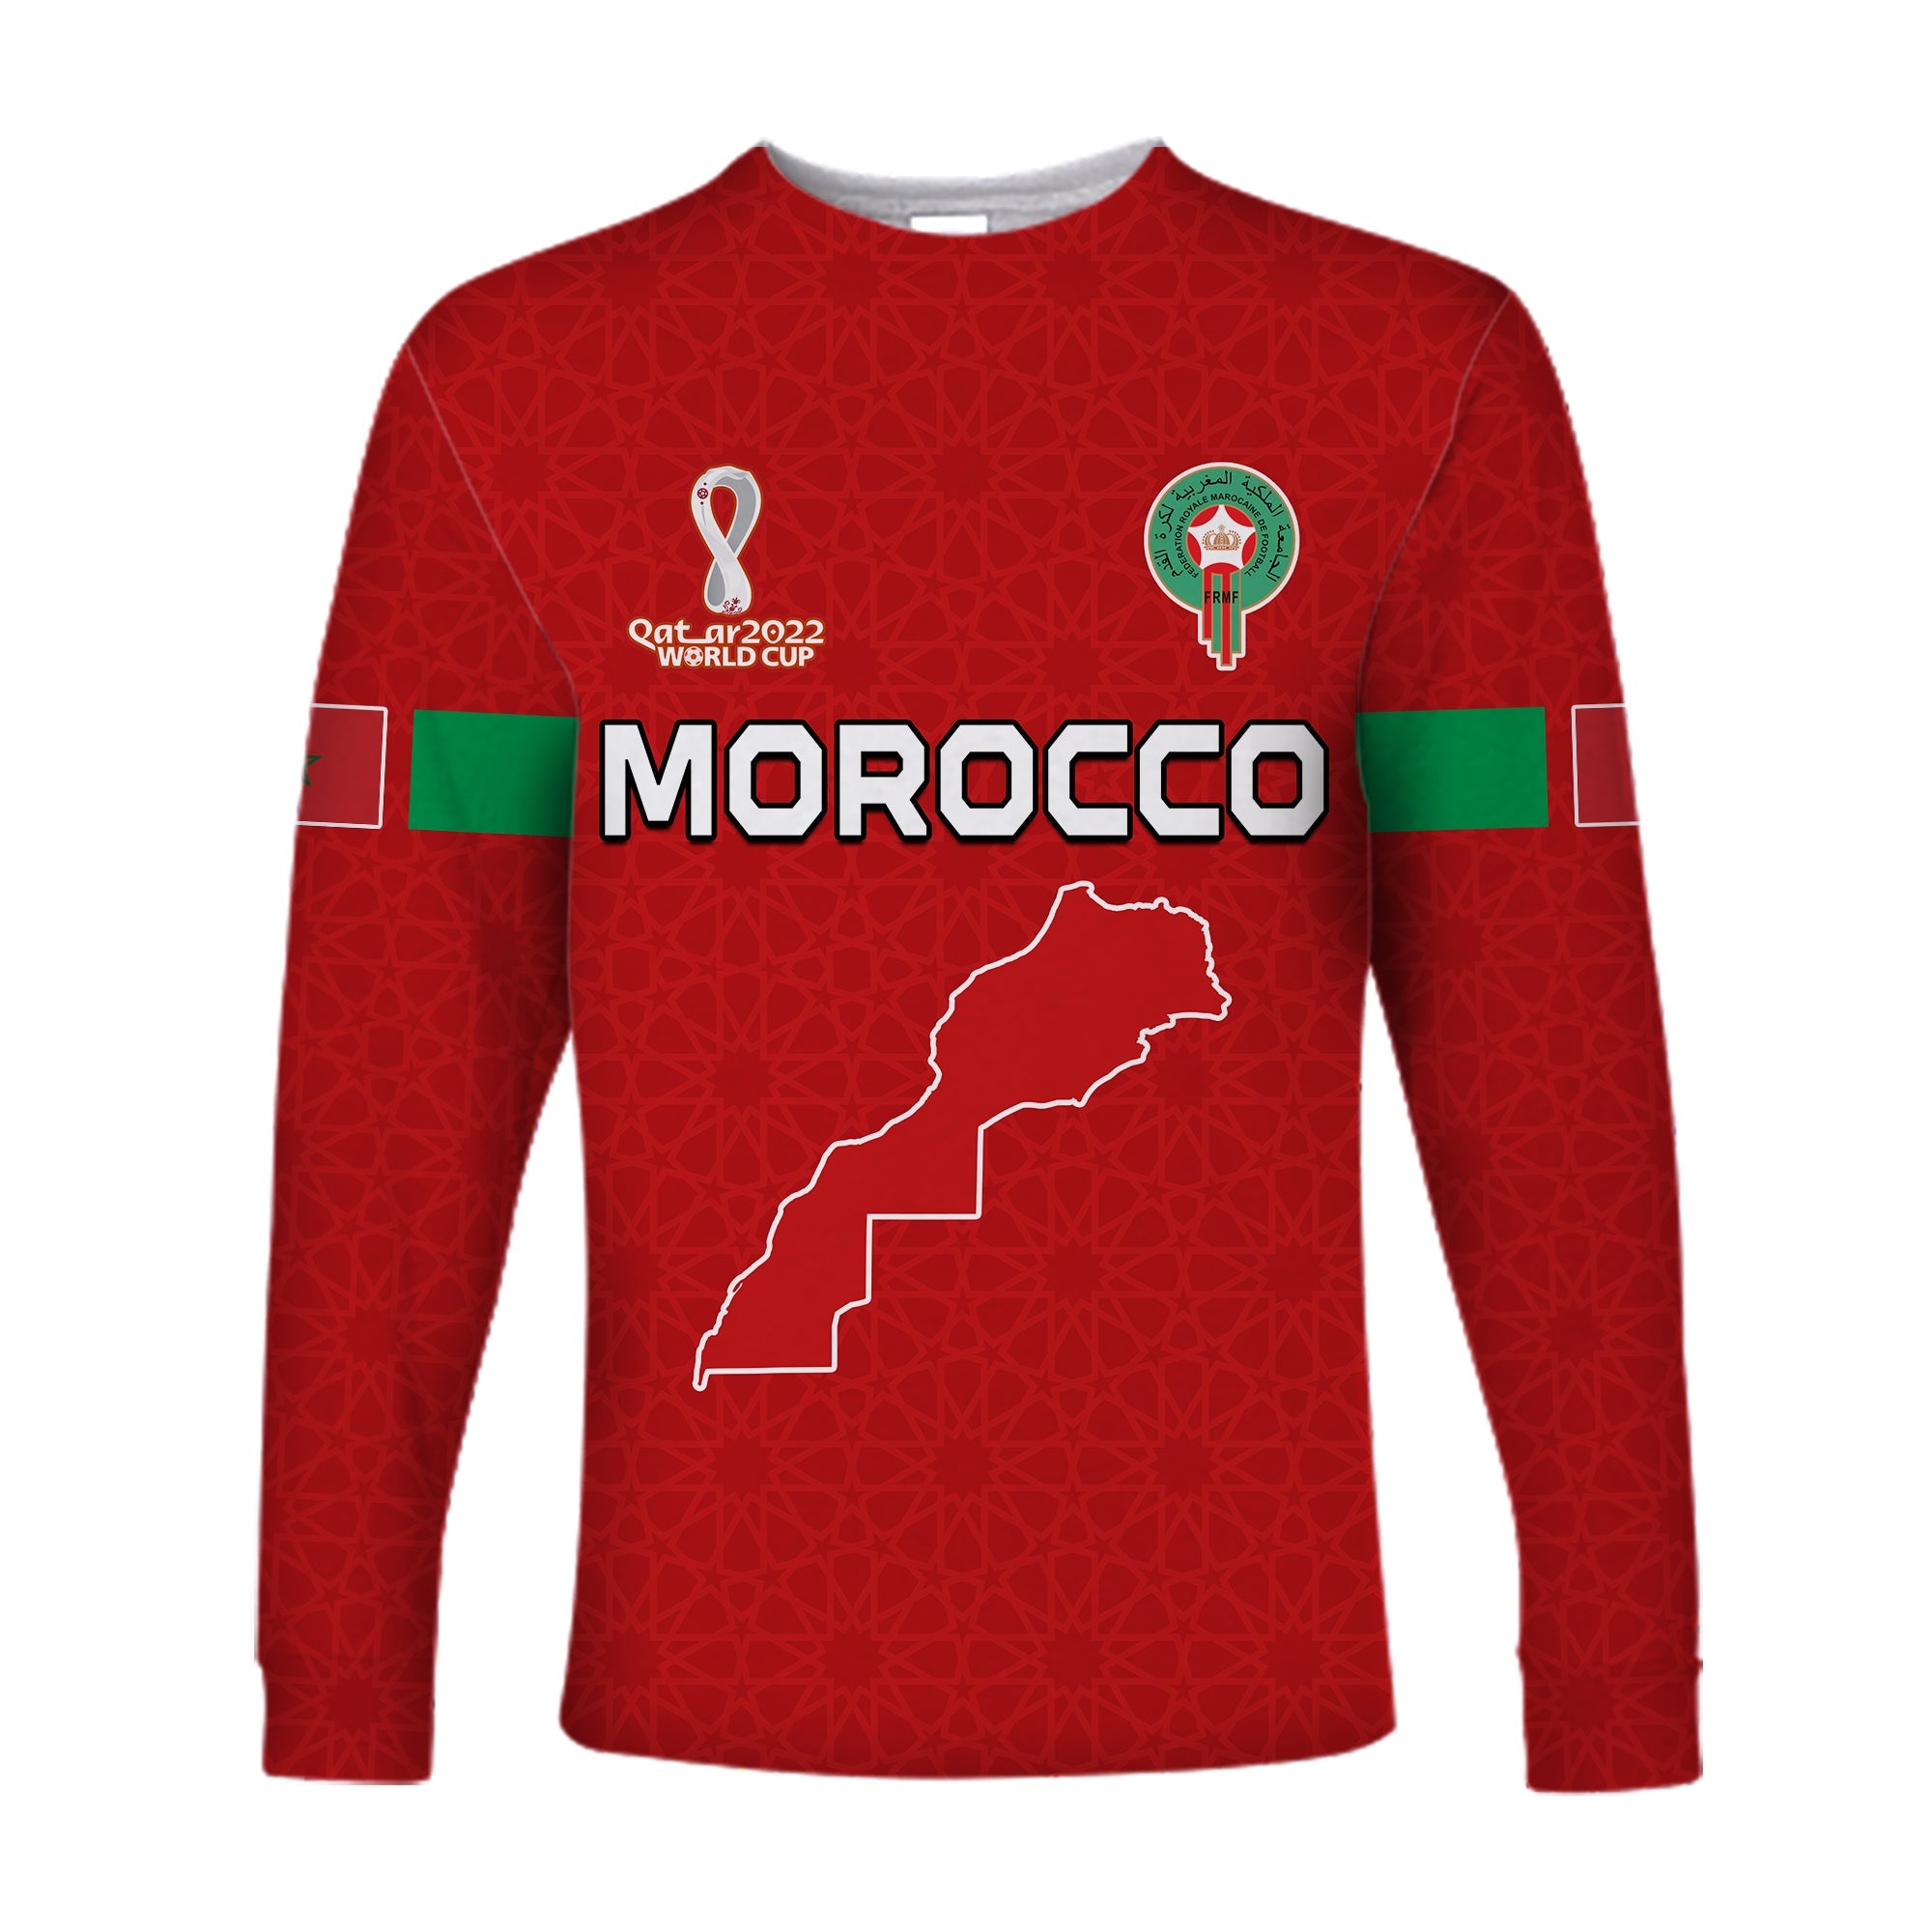 morocco-football-long-sleeve-shirt-champions-world-cup-new-history